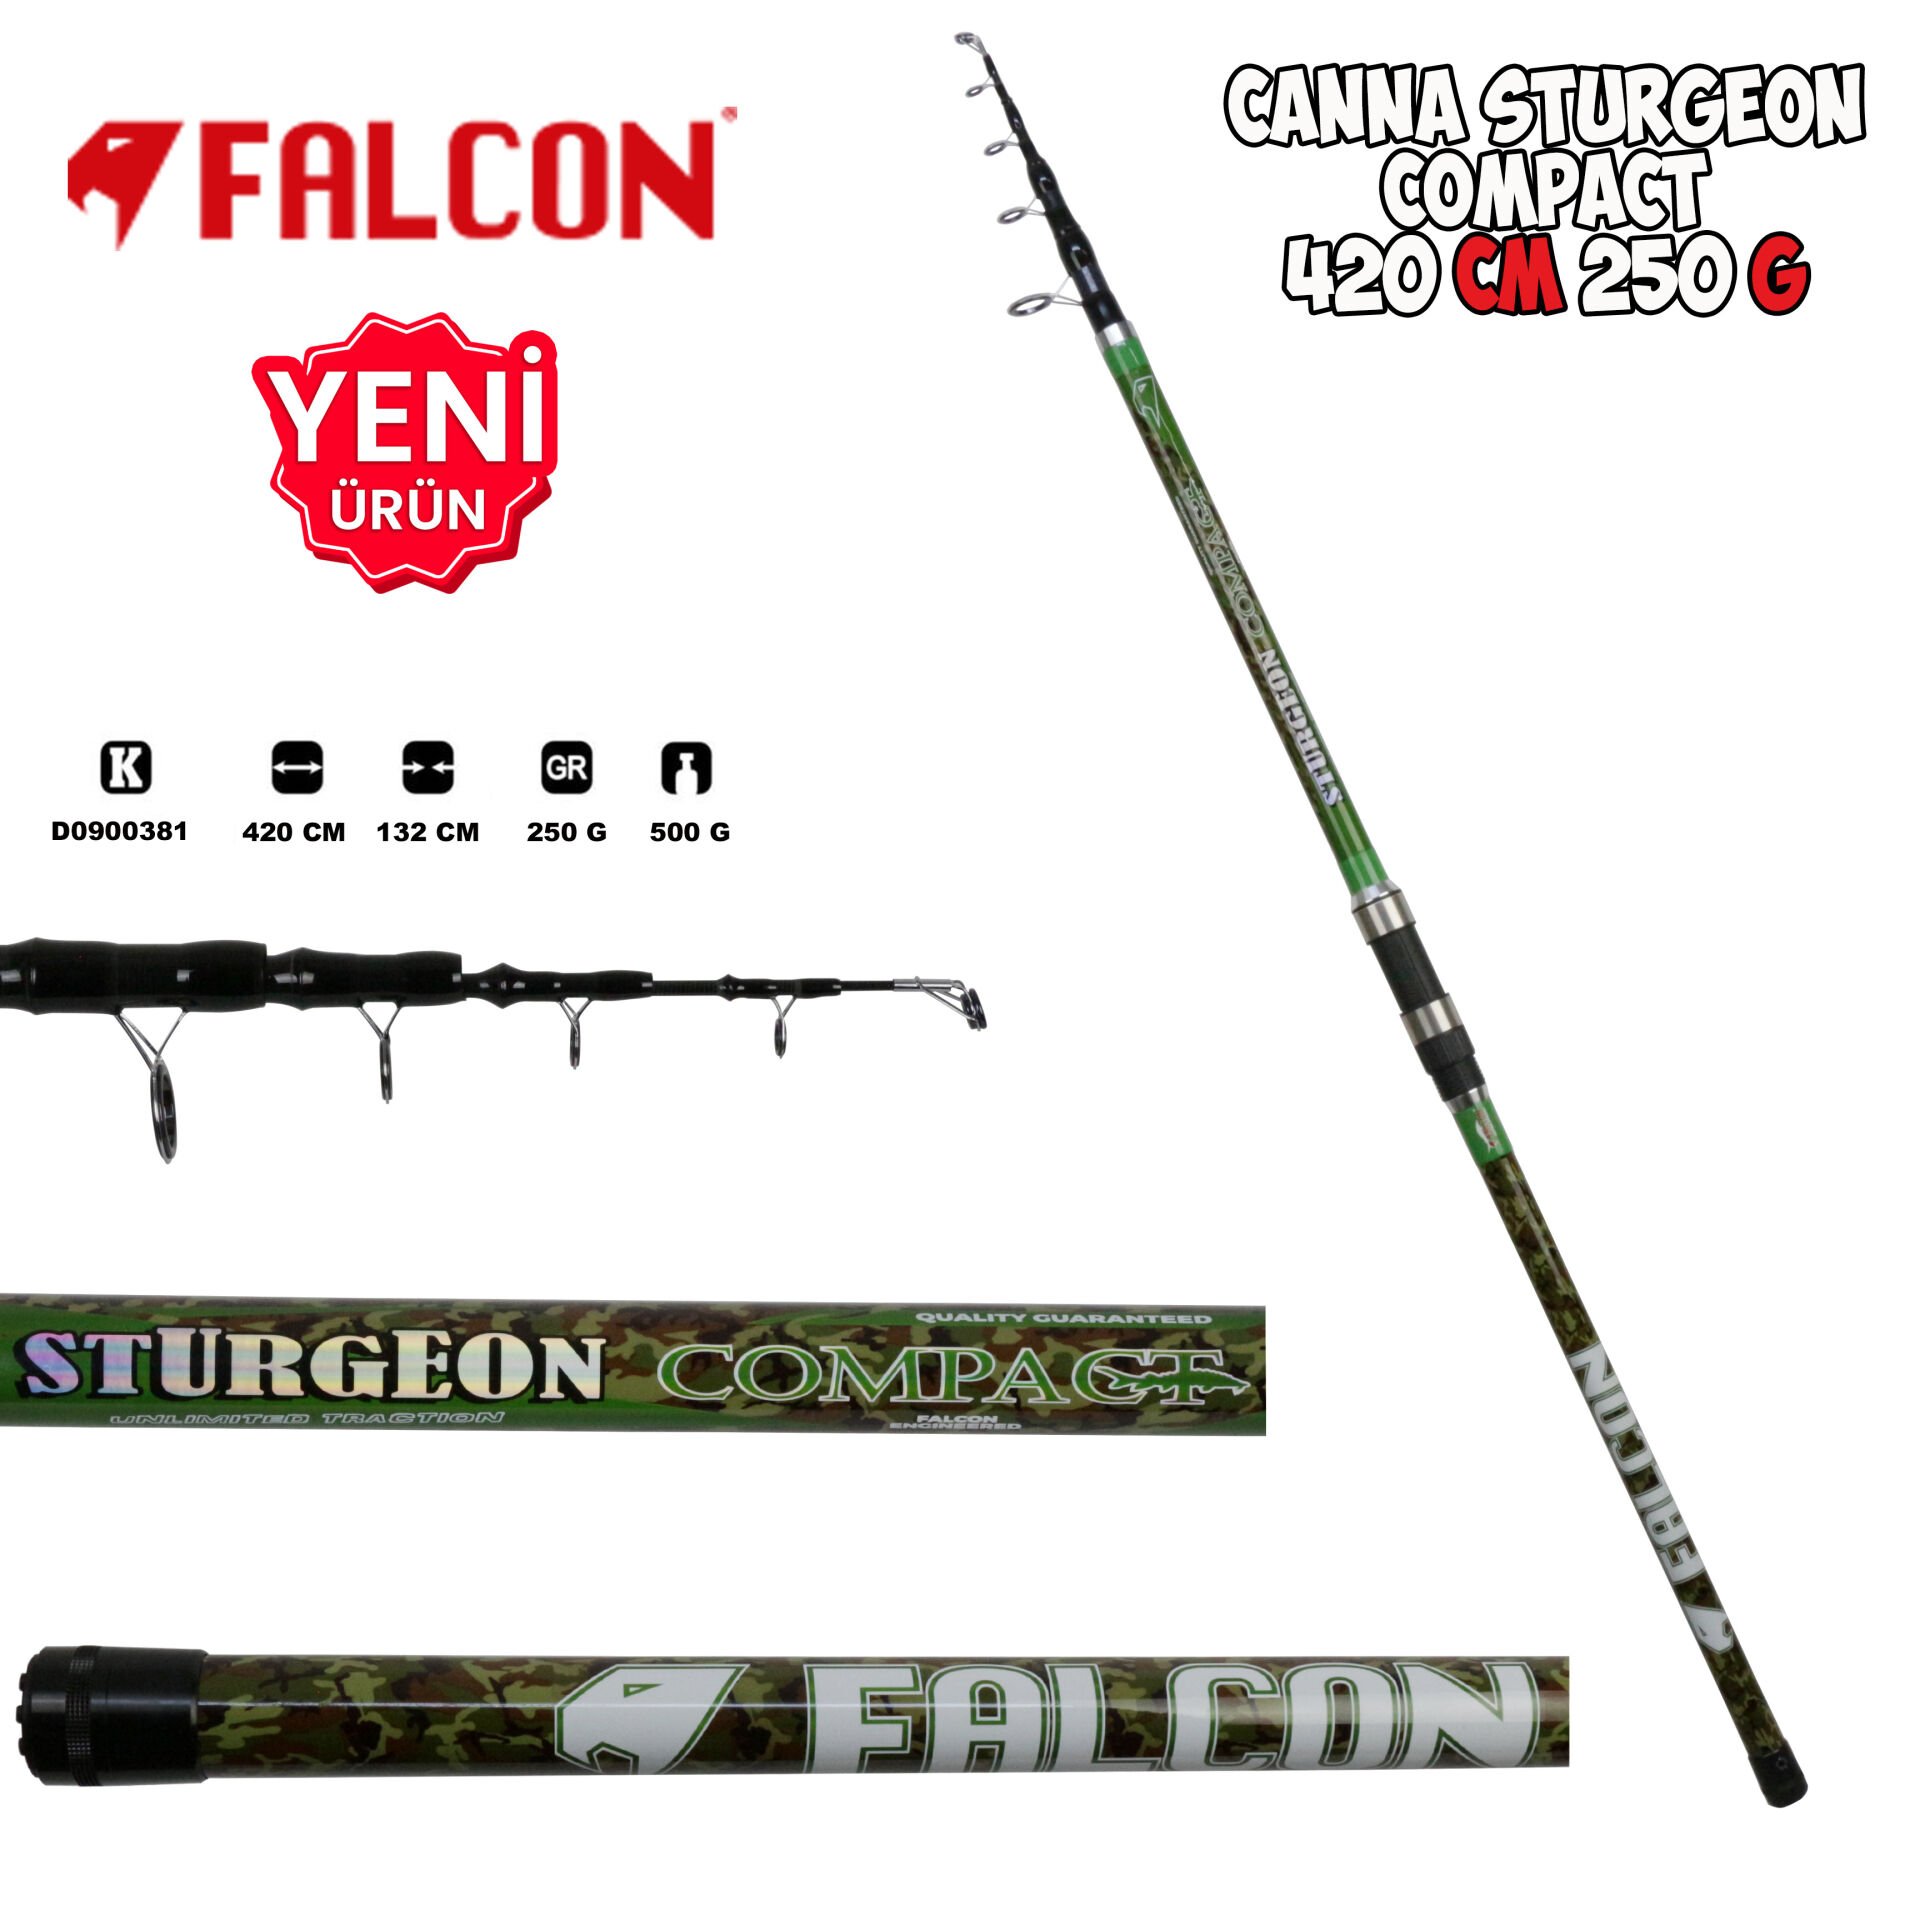 Falcon Canna Sturgeon Compact 420 cm